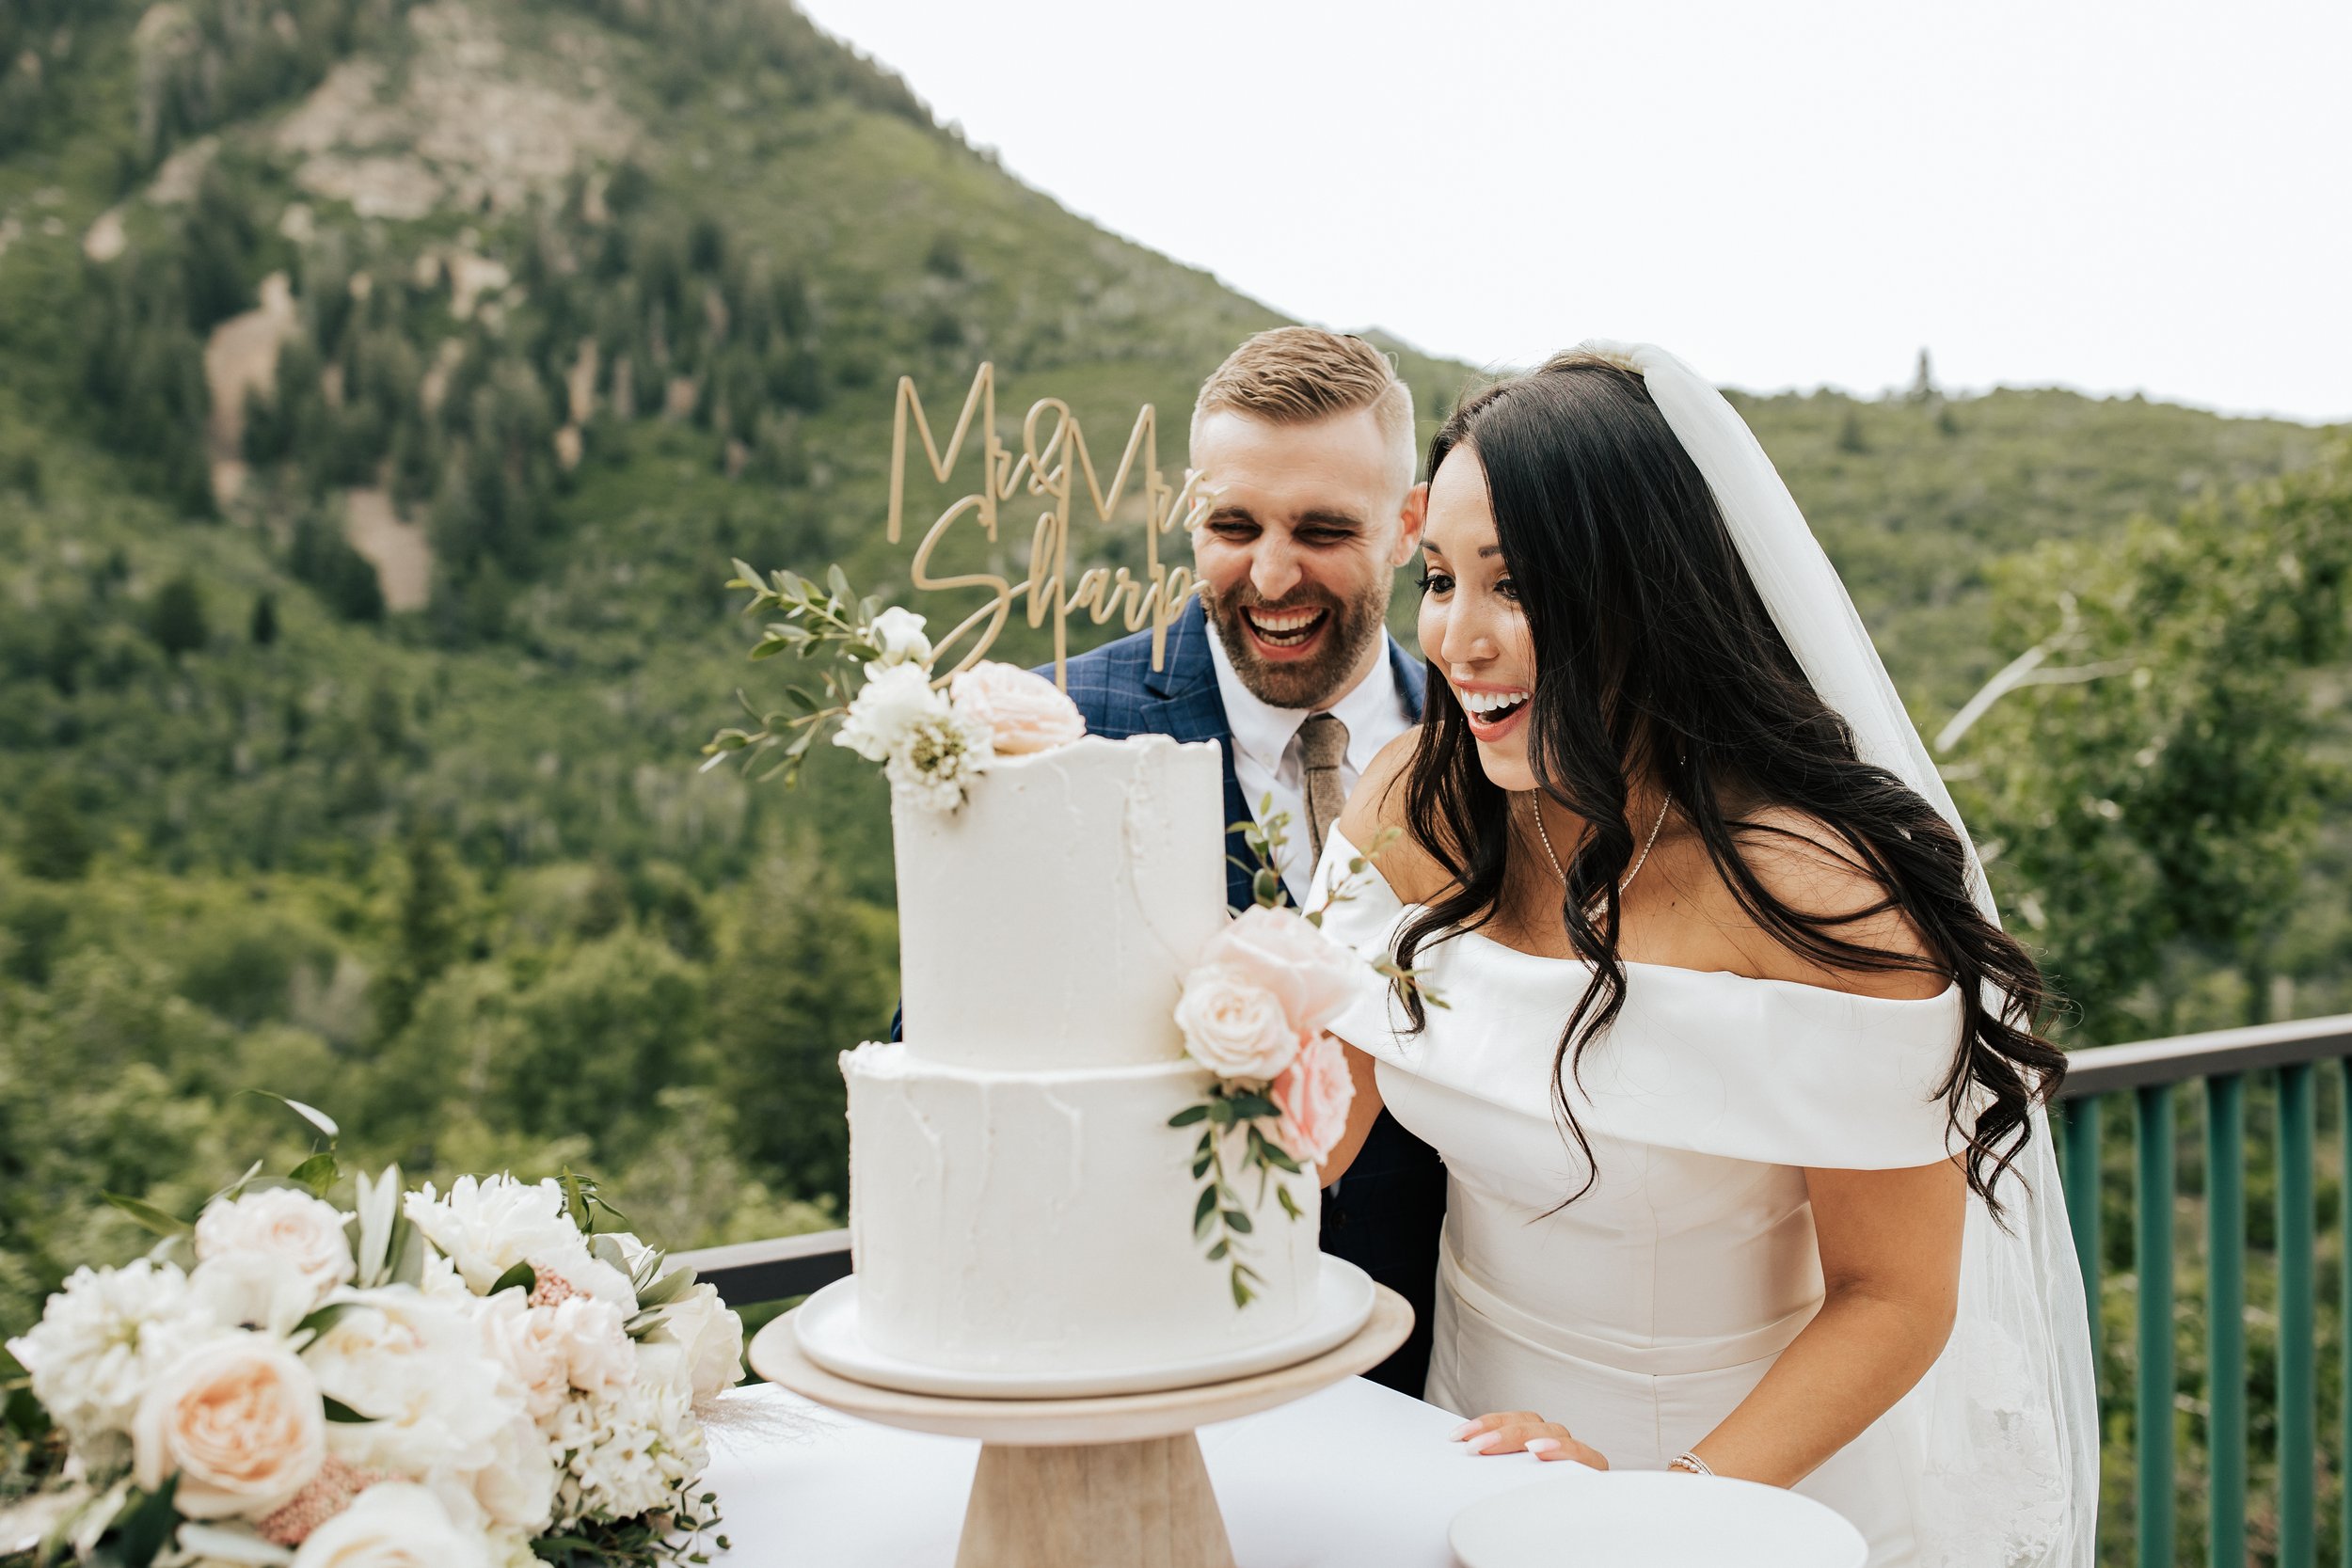  Couple cuts wedding cake together. Beautiful two tier wedding cake with flowers. #weddingcake #weddingphotos #utahwedding 